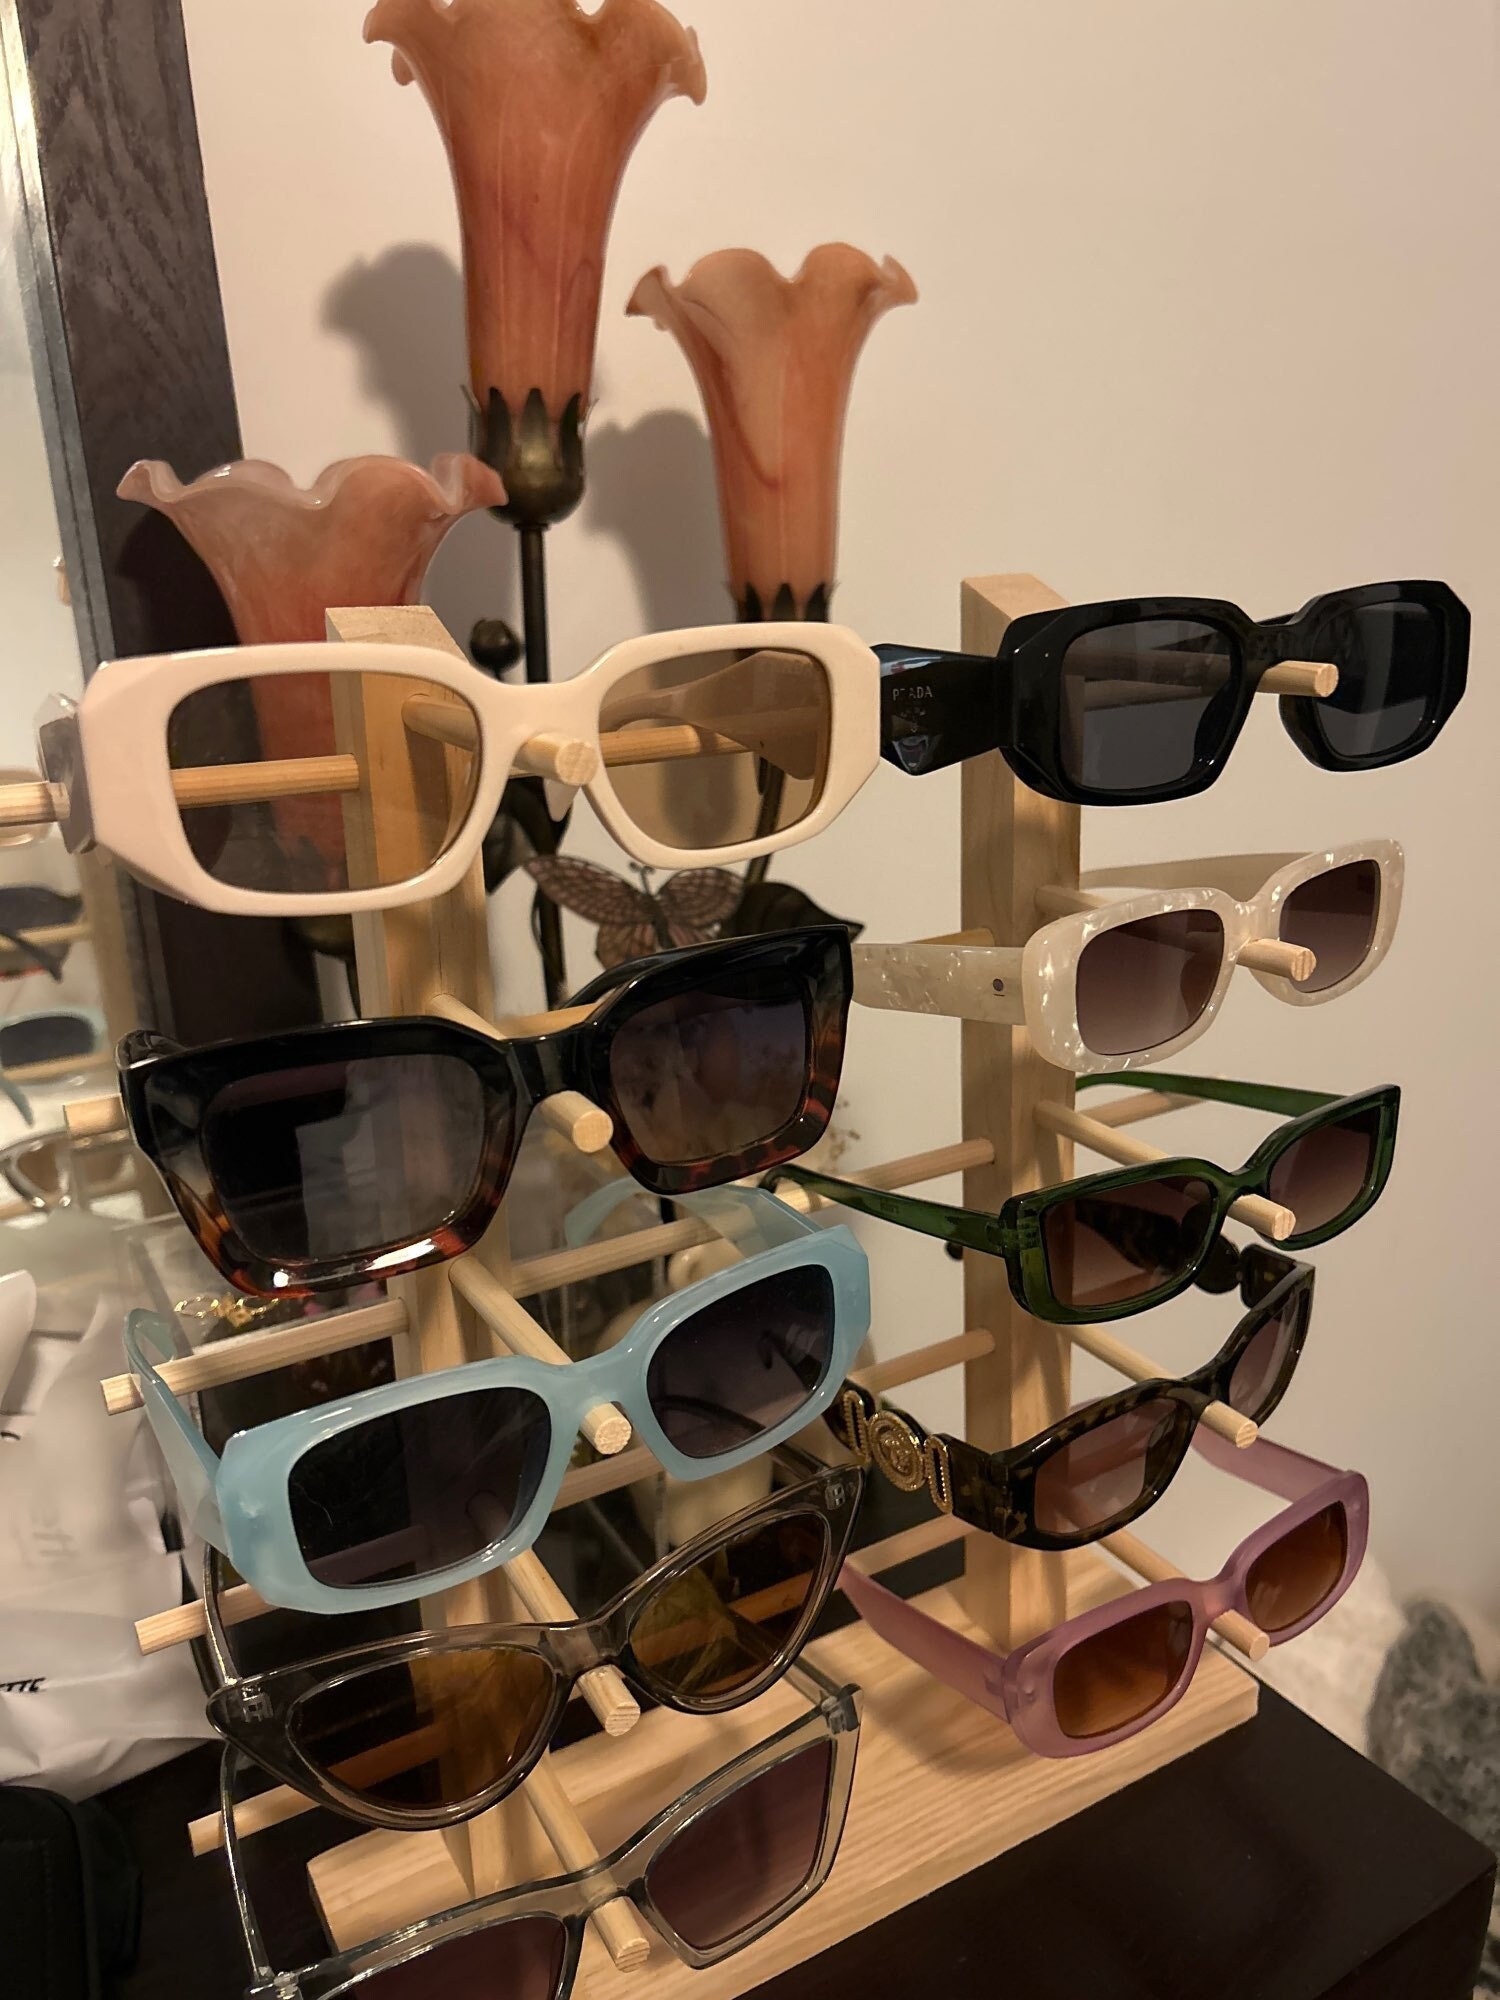 Glasses tray sauna eyeglass shelf